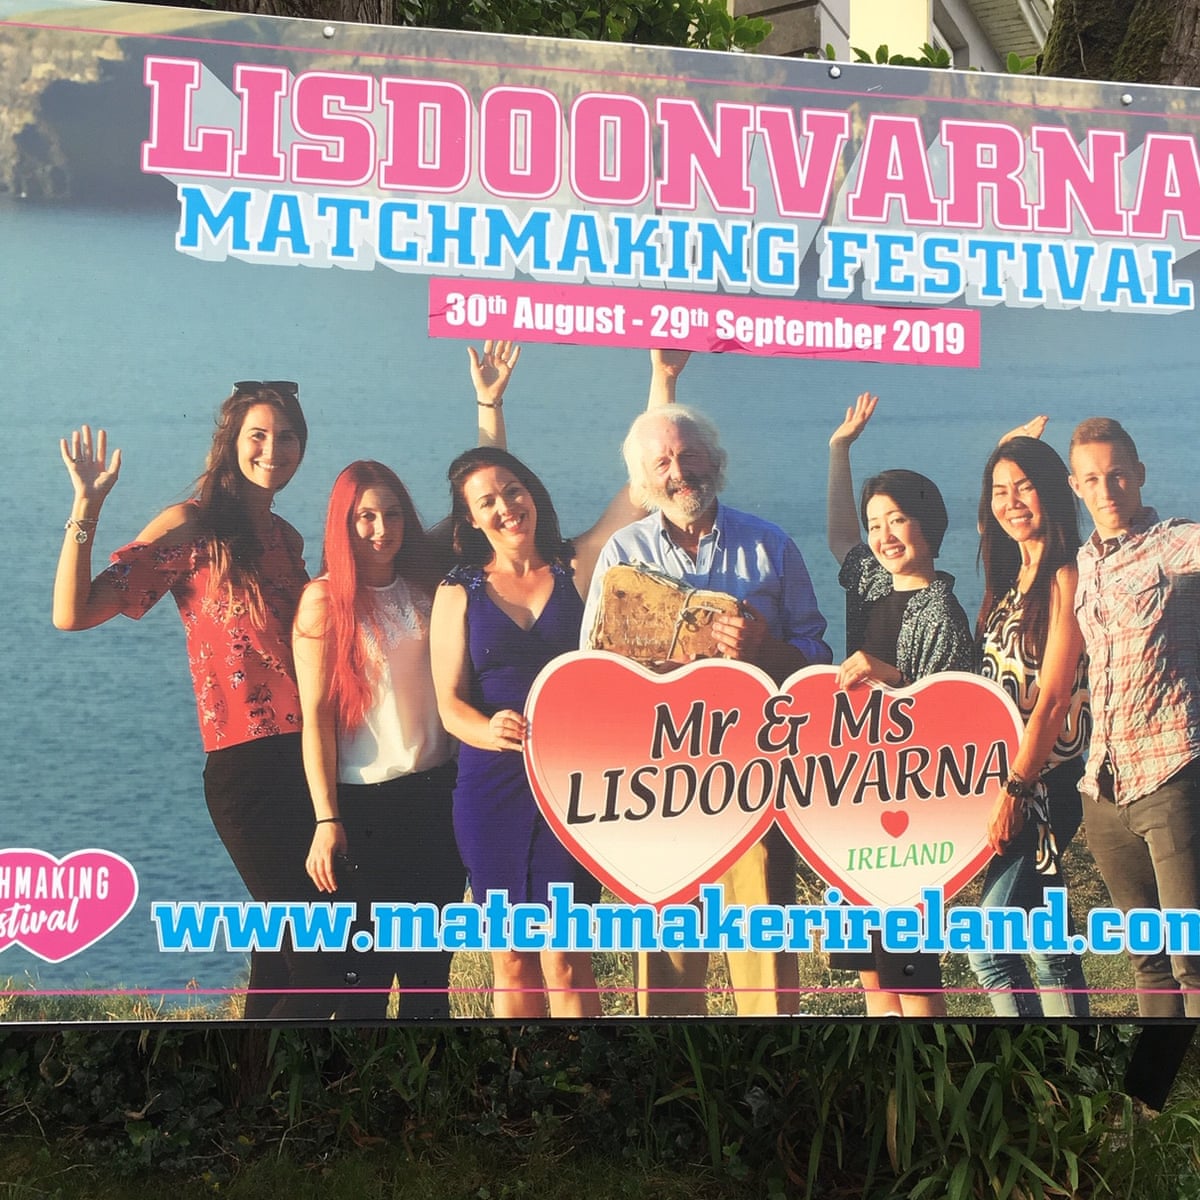 Matchmaking Festival Lisdoonvarna Ireland - Invoset